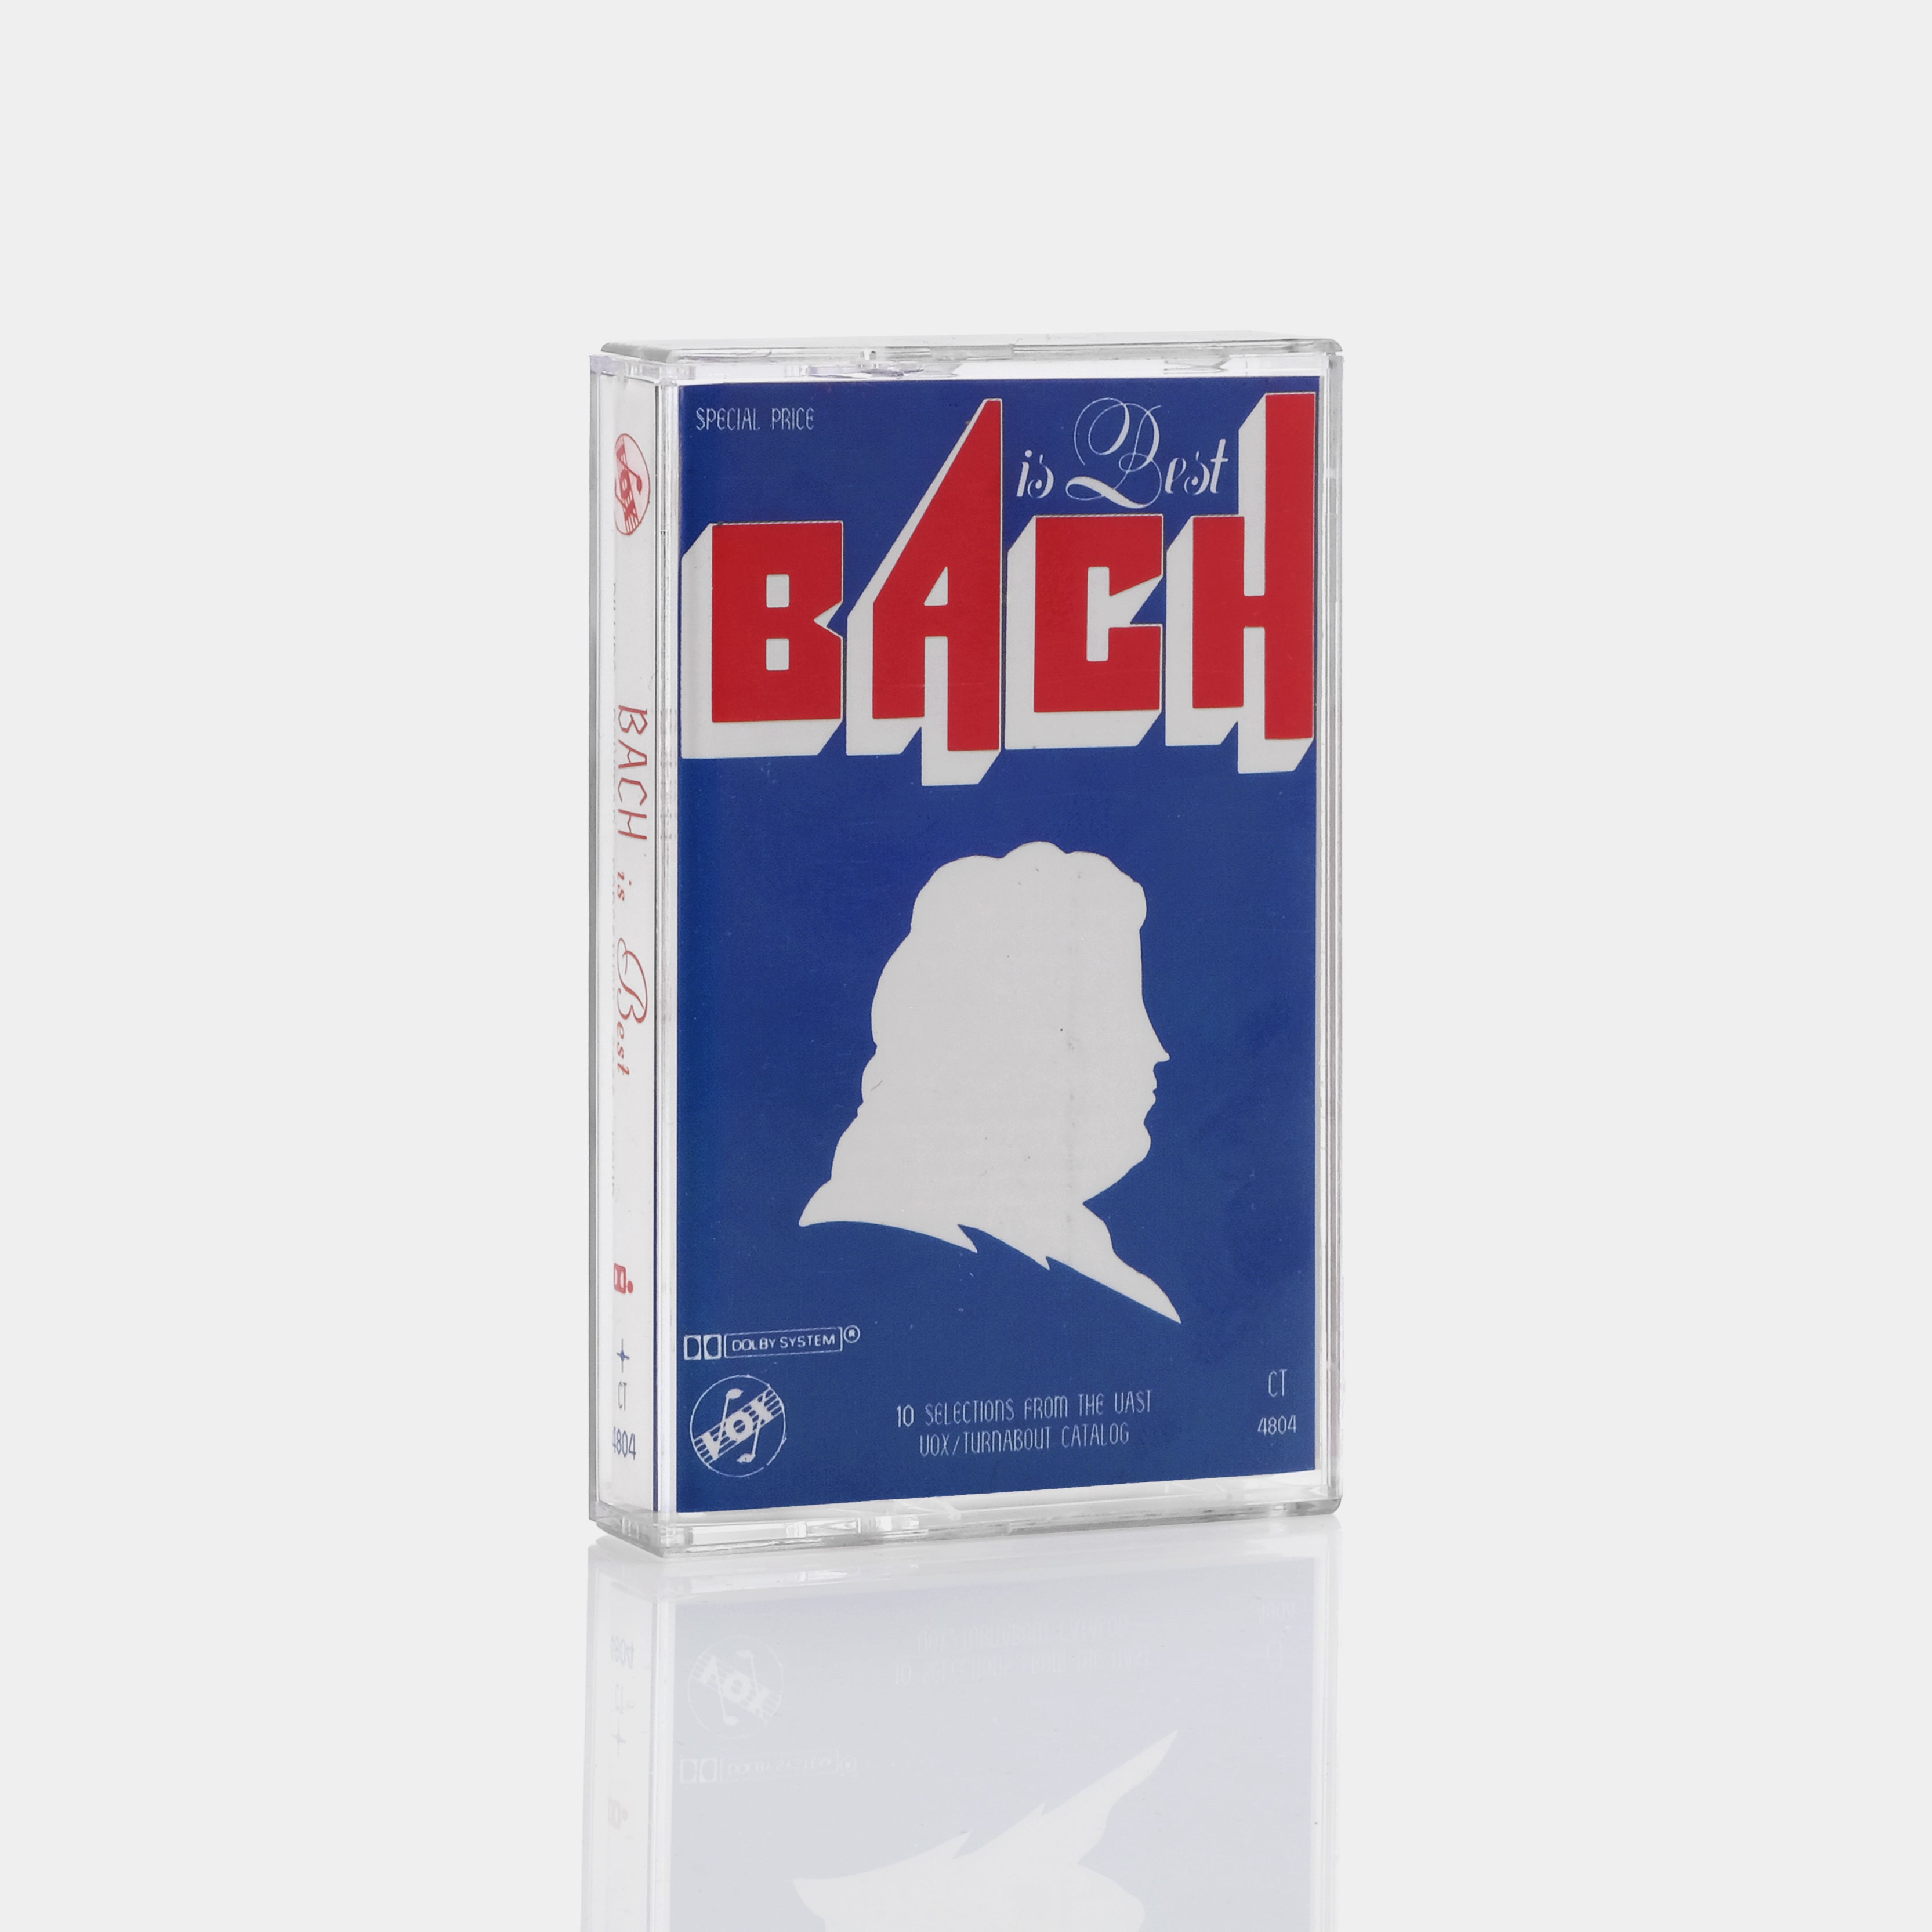 Bach Is Best Cassette Tape